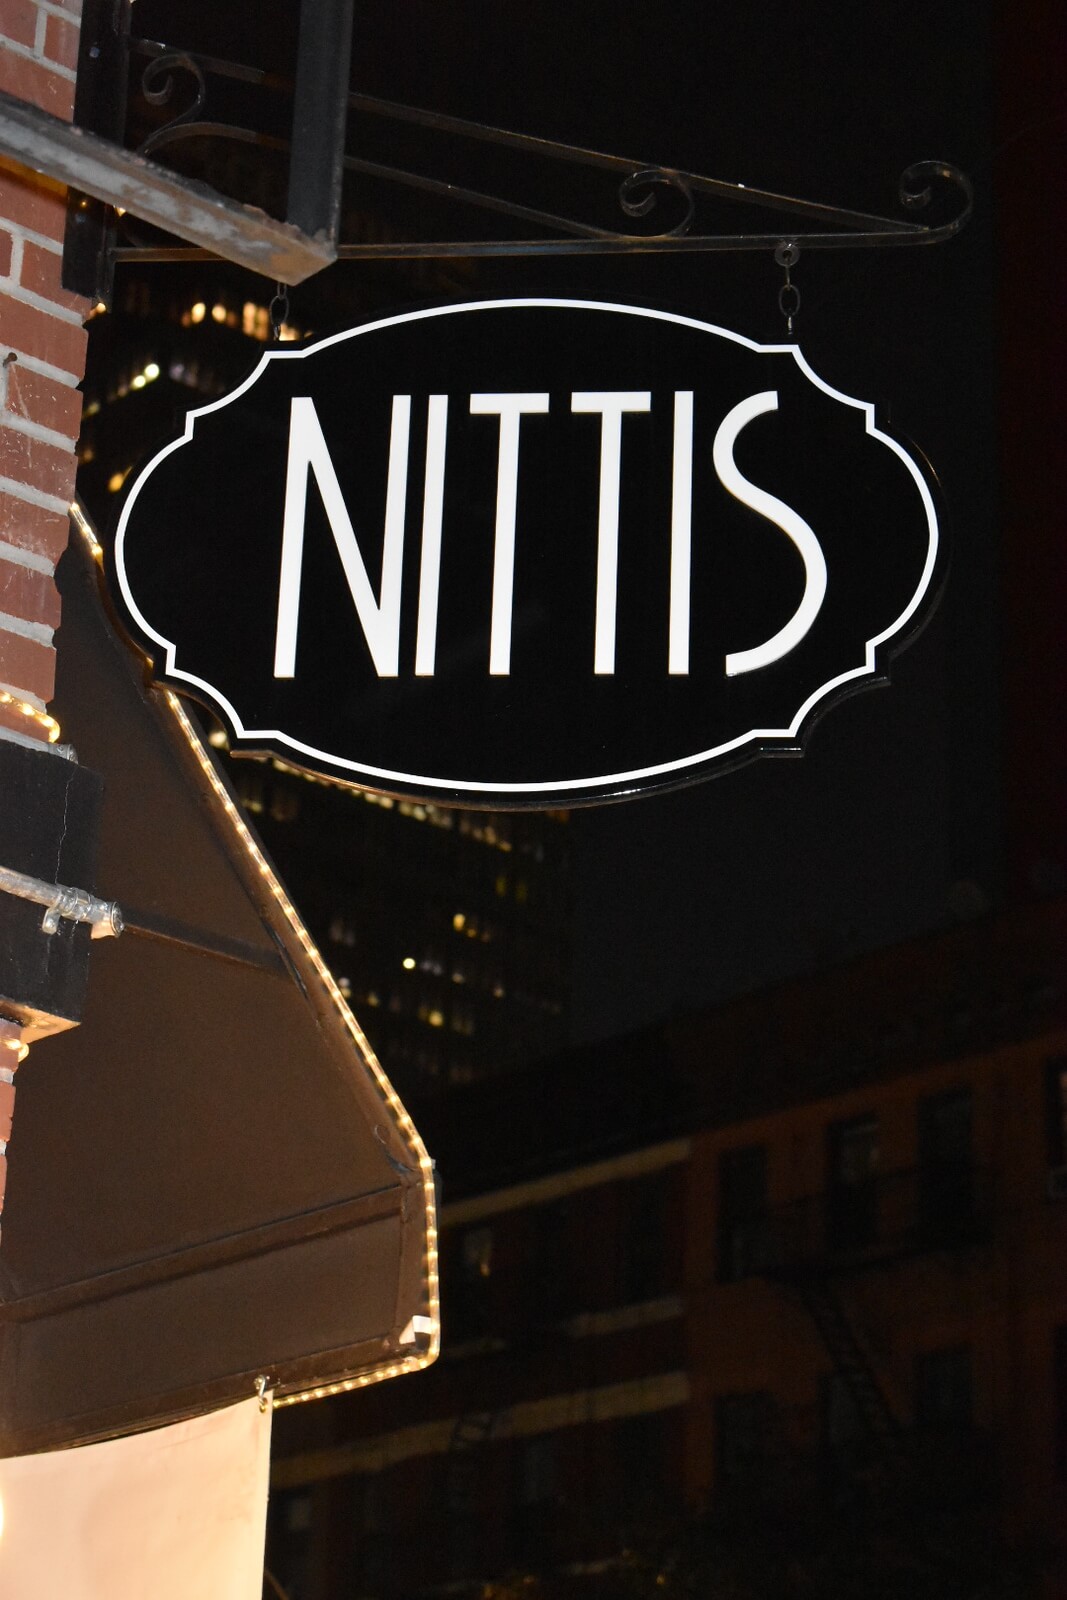 Black street sign with 'Nittis' written in white